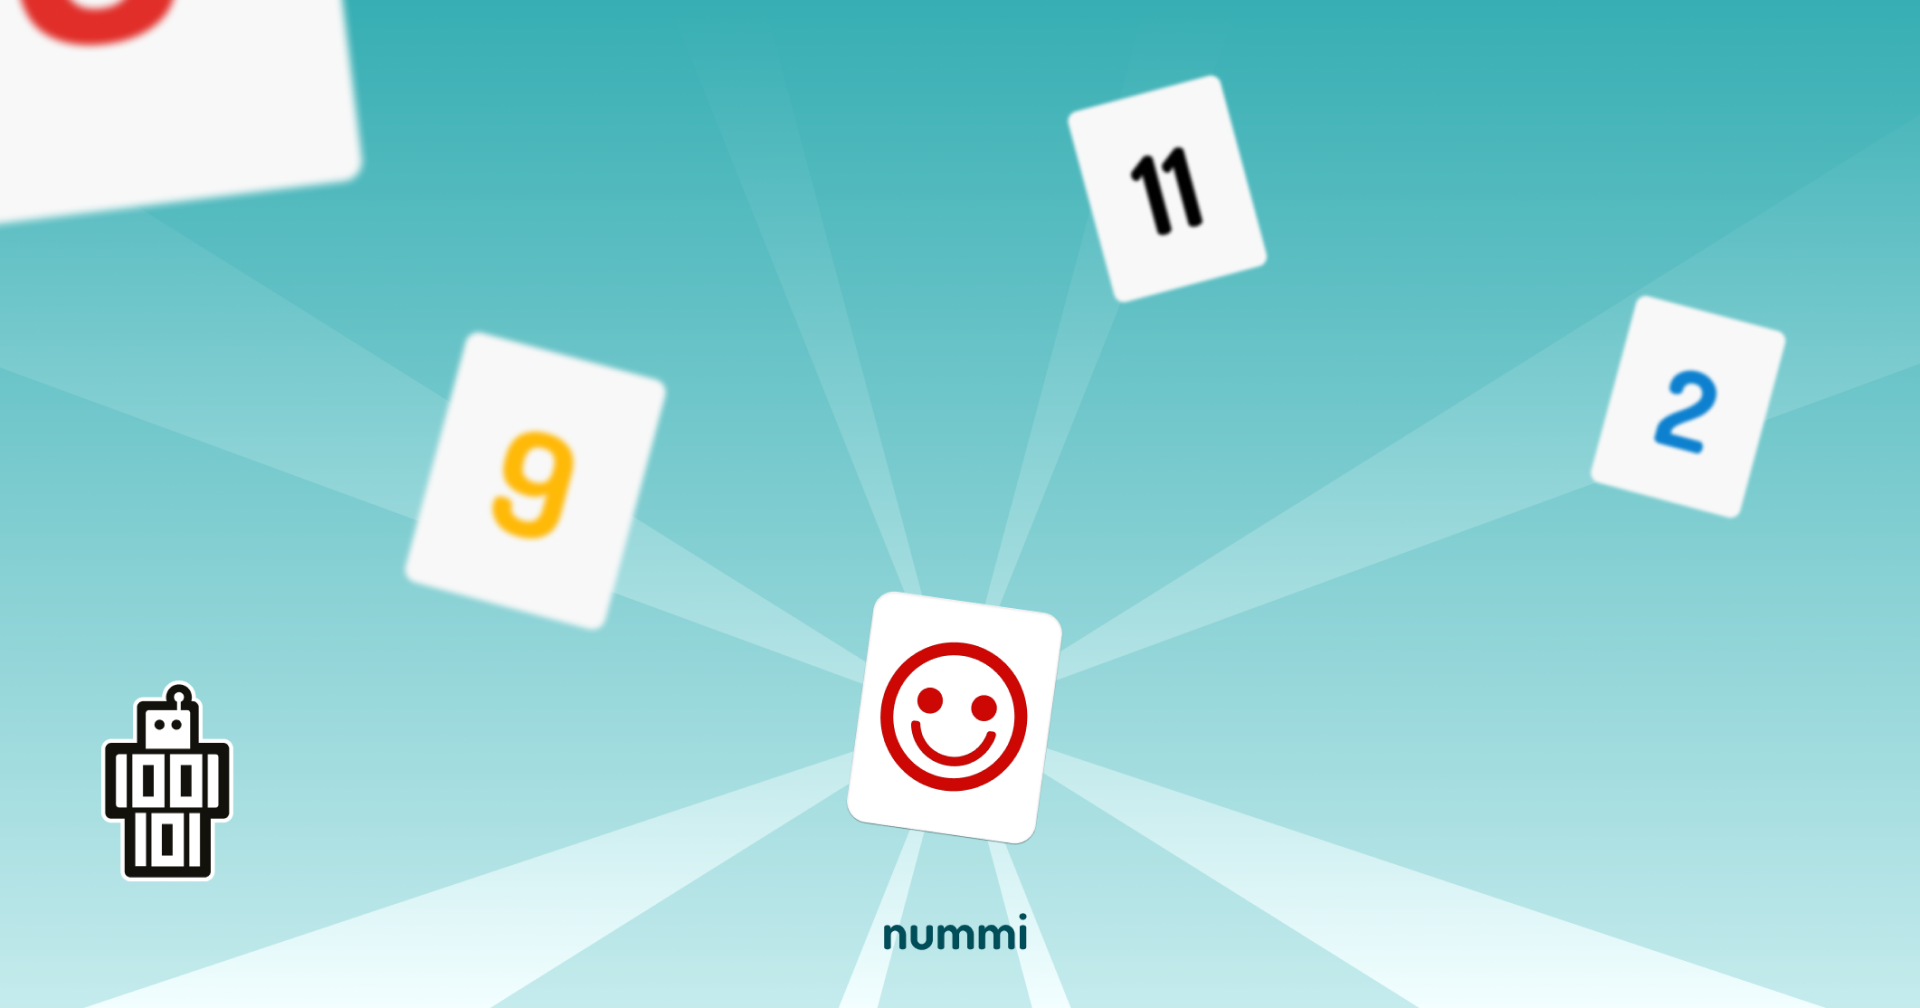 Nummi maintenance update! - Our app nummi has a new update!